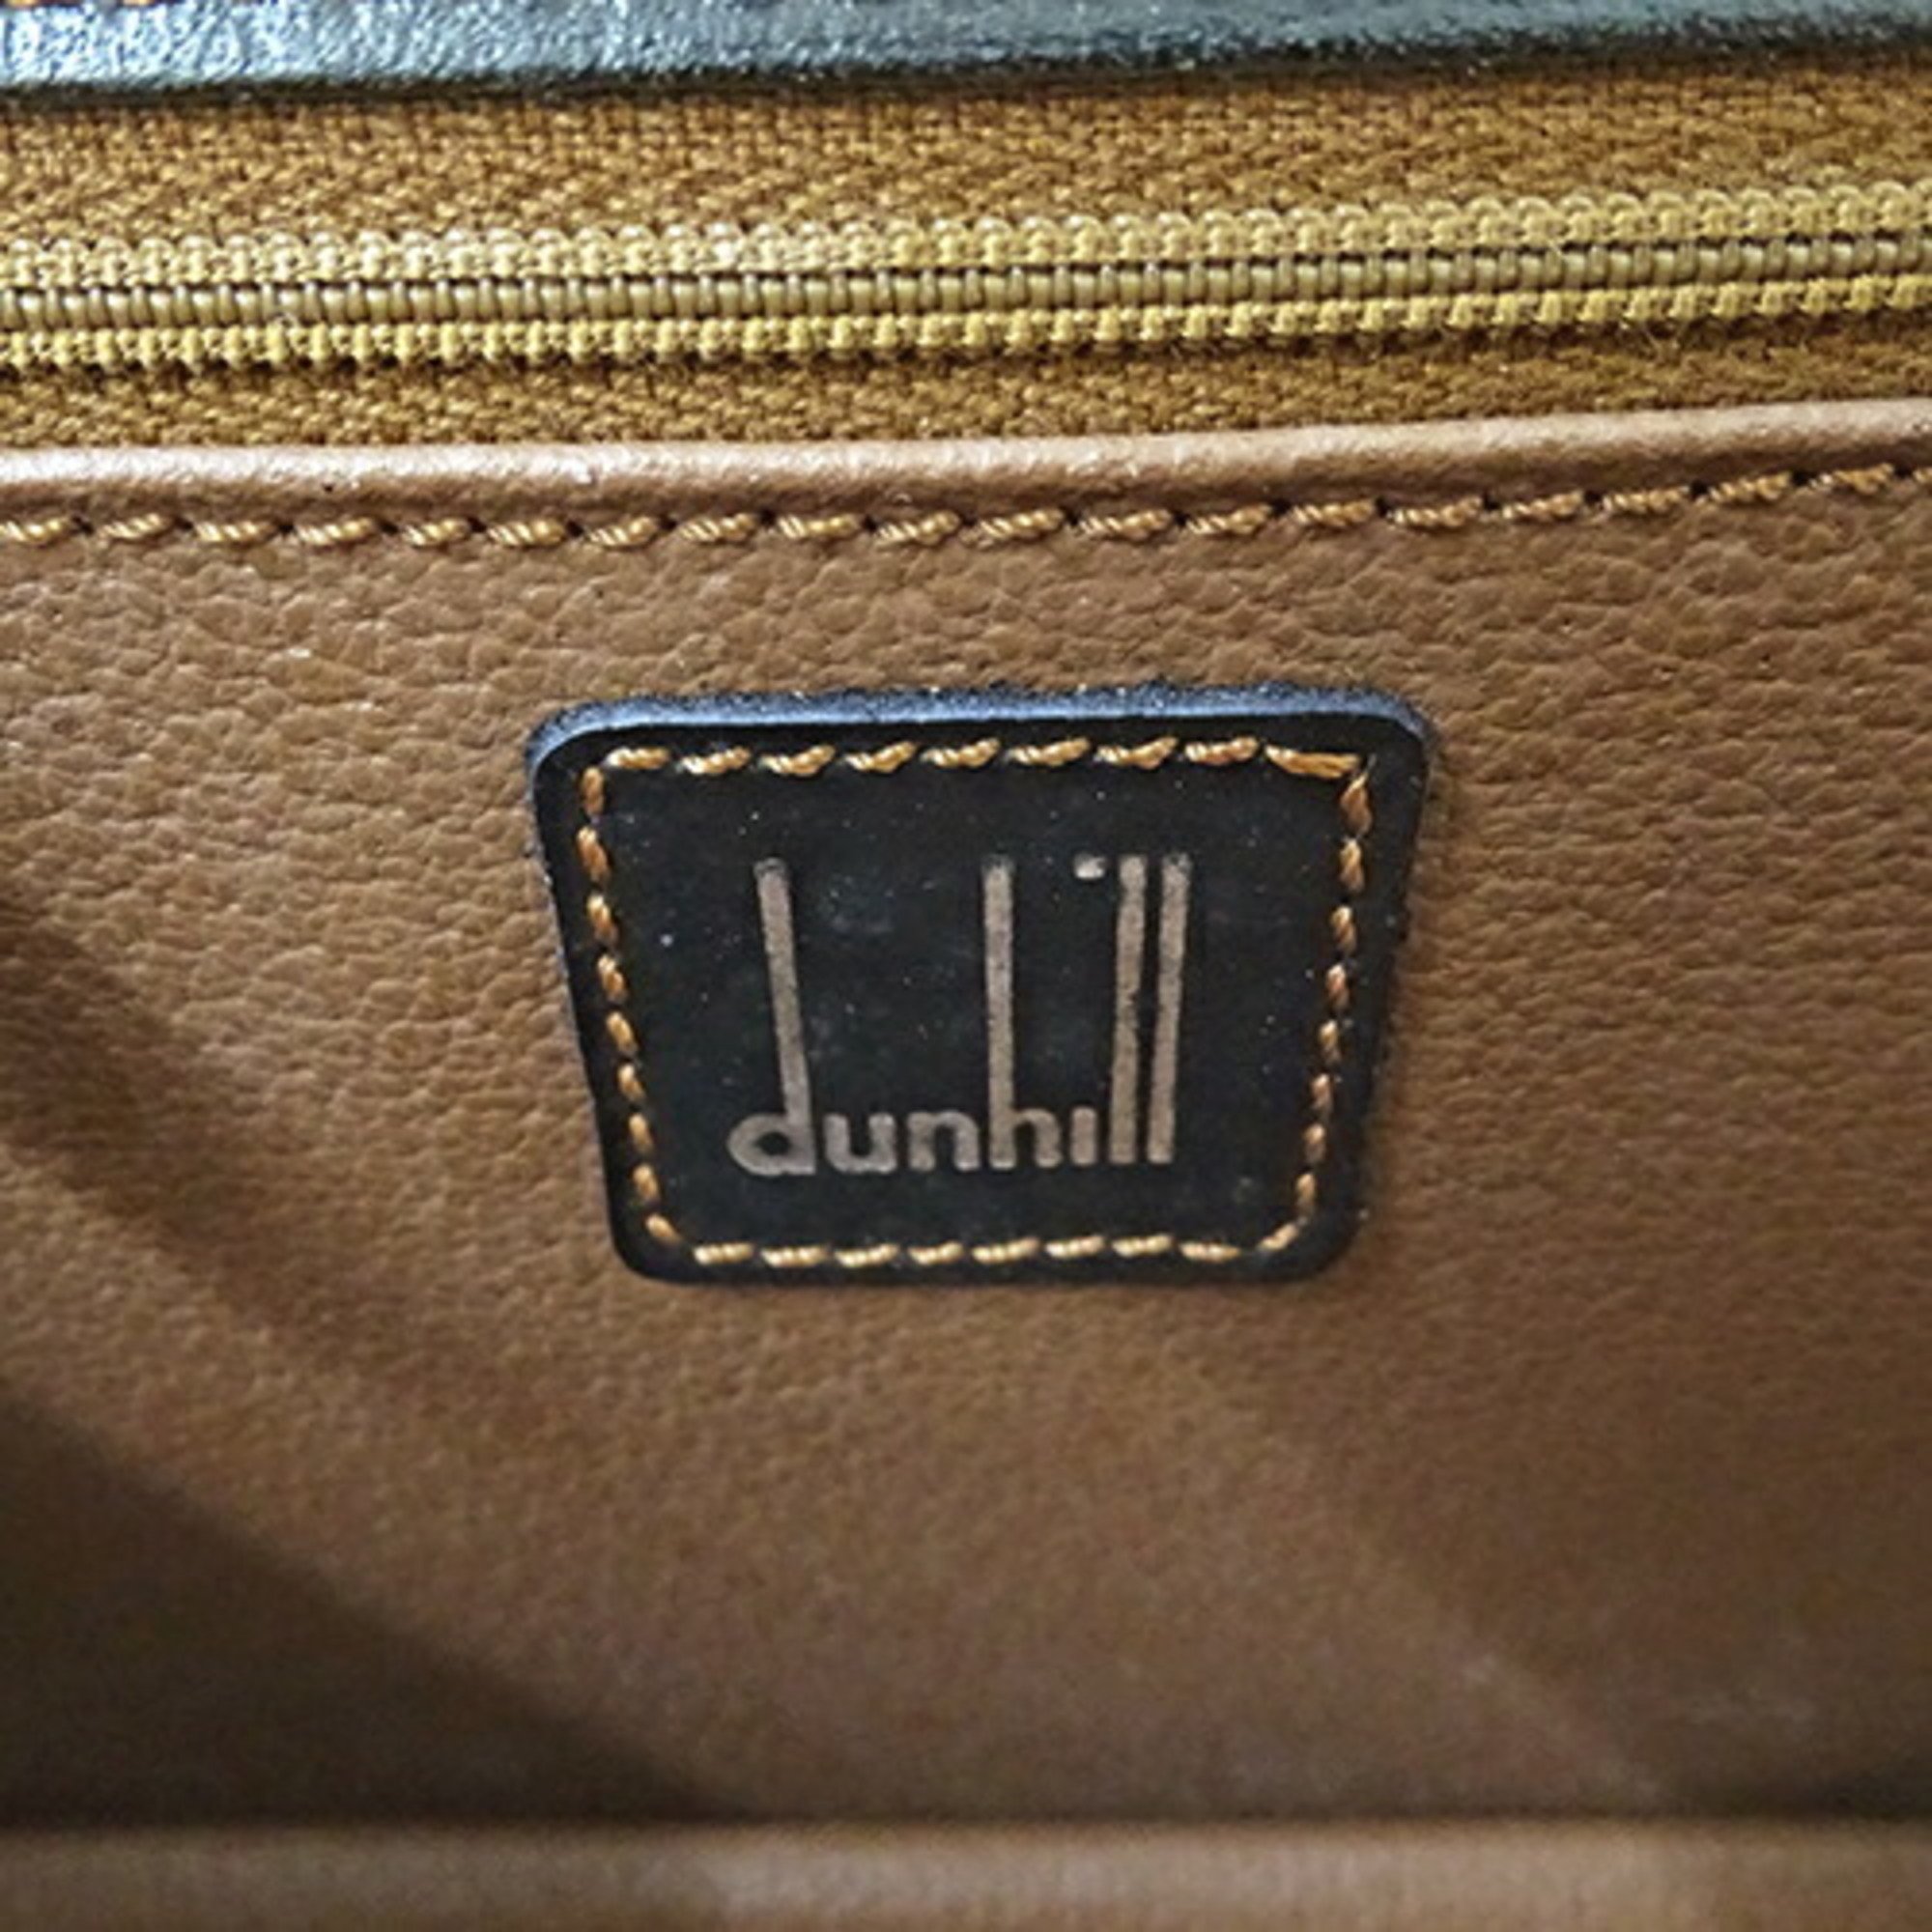 Dunhill Bag Men's Brand Clutch Second Leather Black